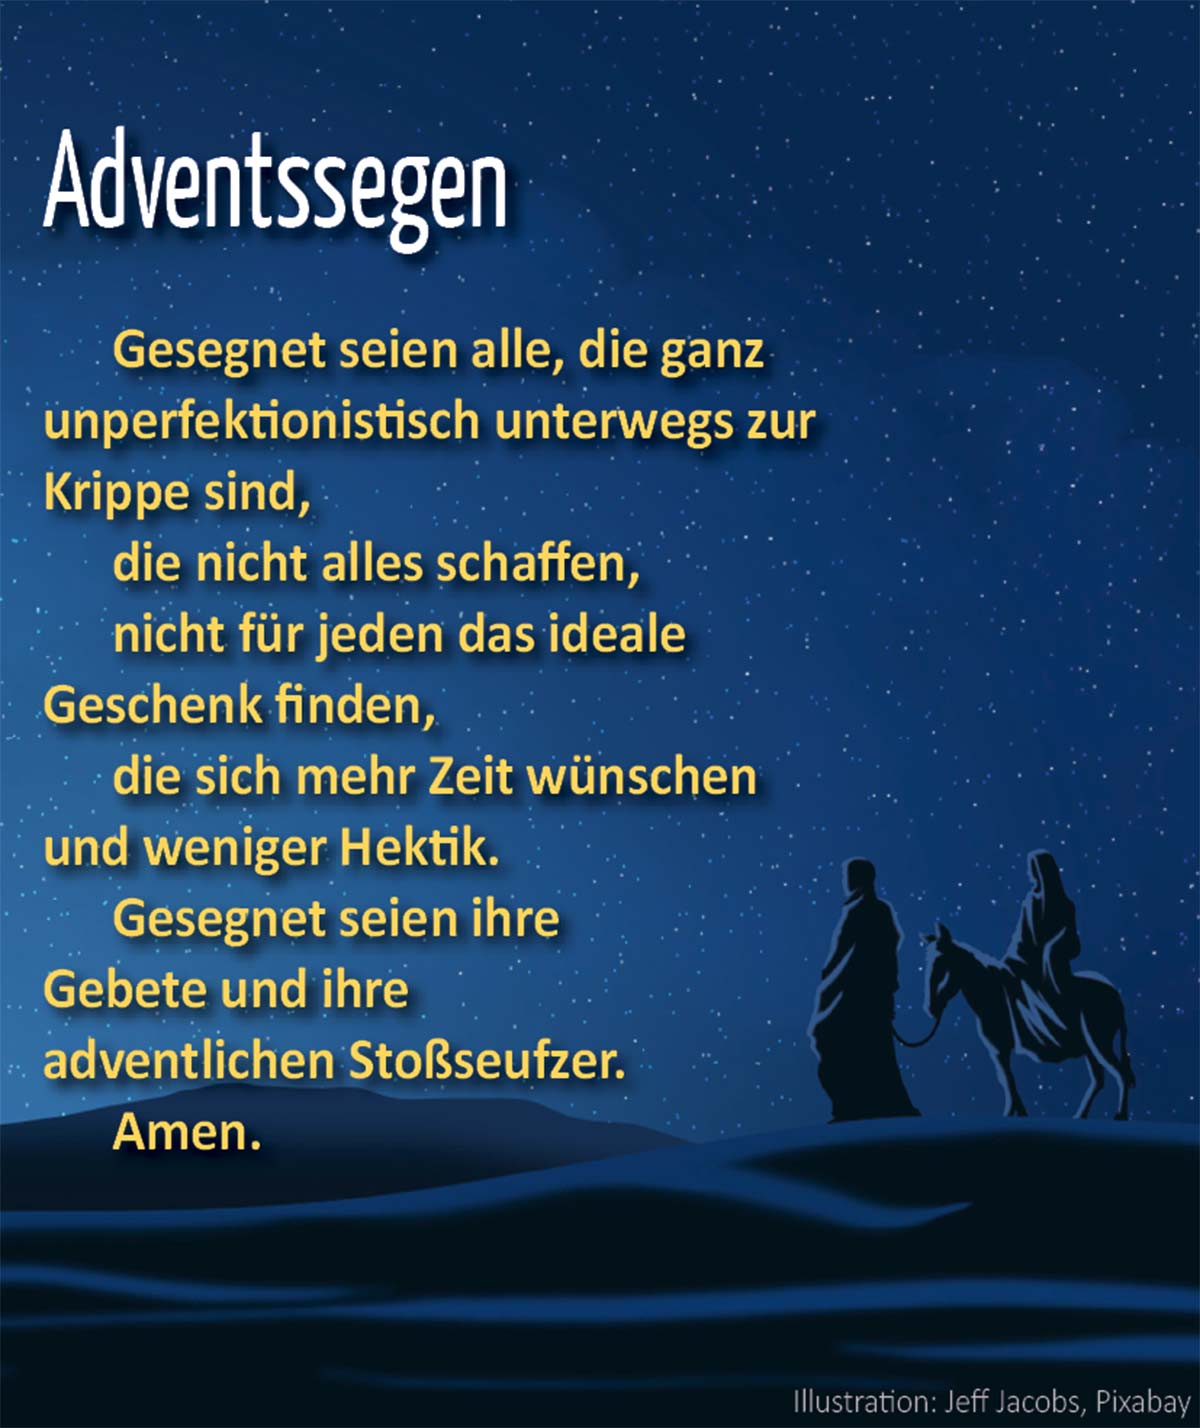 Spirituelles: Adventssegen (Illustration Auf dem Weg nach Bethlehem: Jeff Jacobs, pixabay)